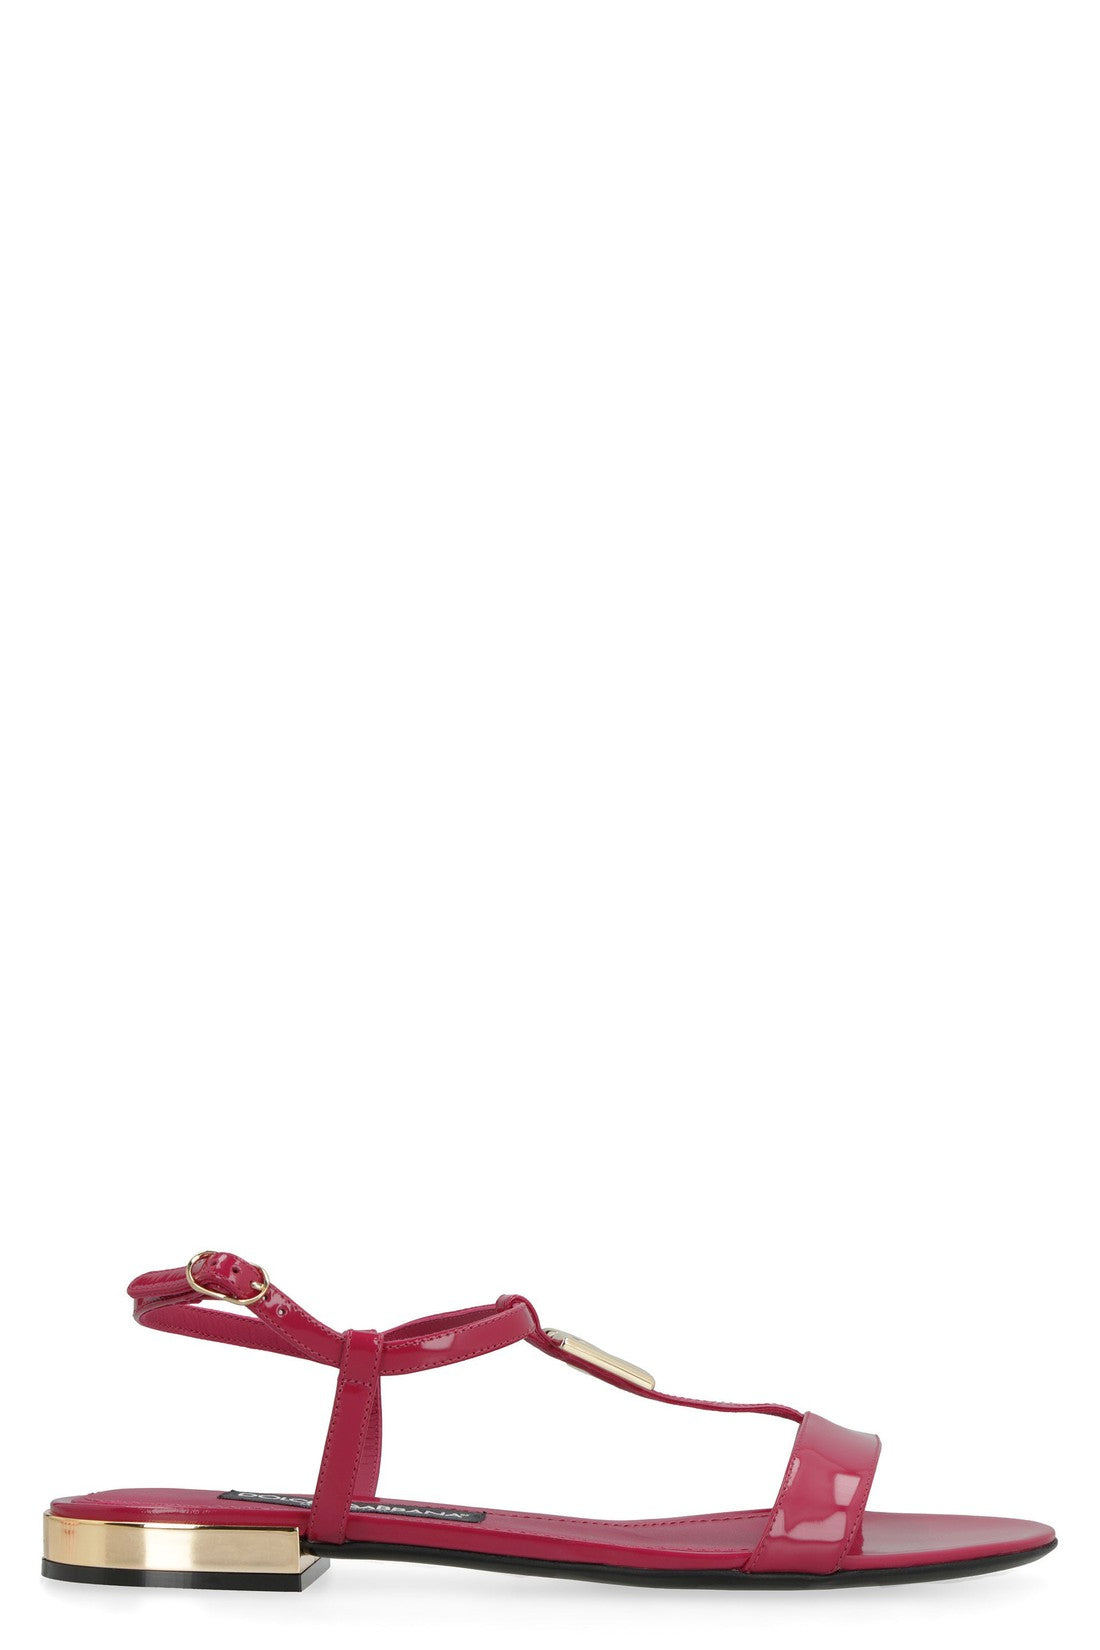 Dolce & Gabbana-OUTLET-SALE-Patent leather flat sandals-ARCHIVIST